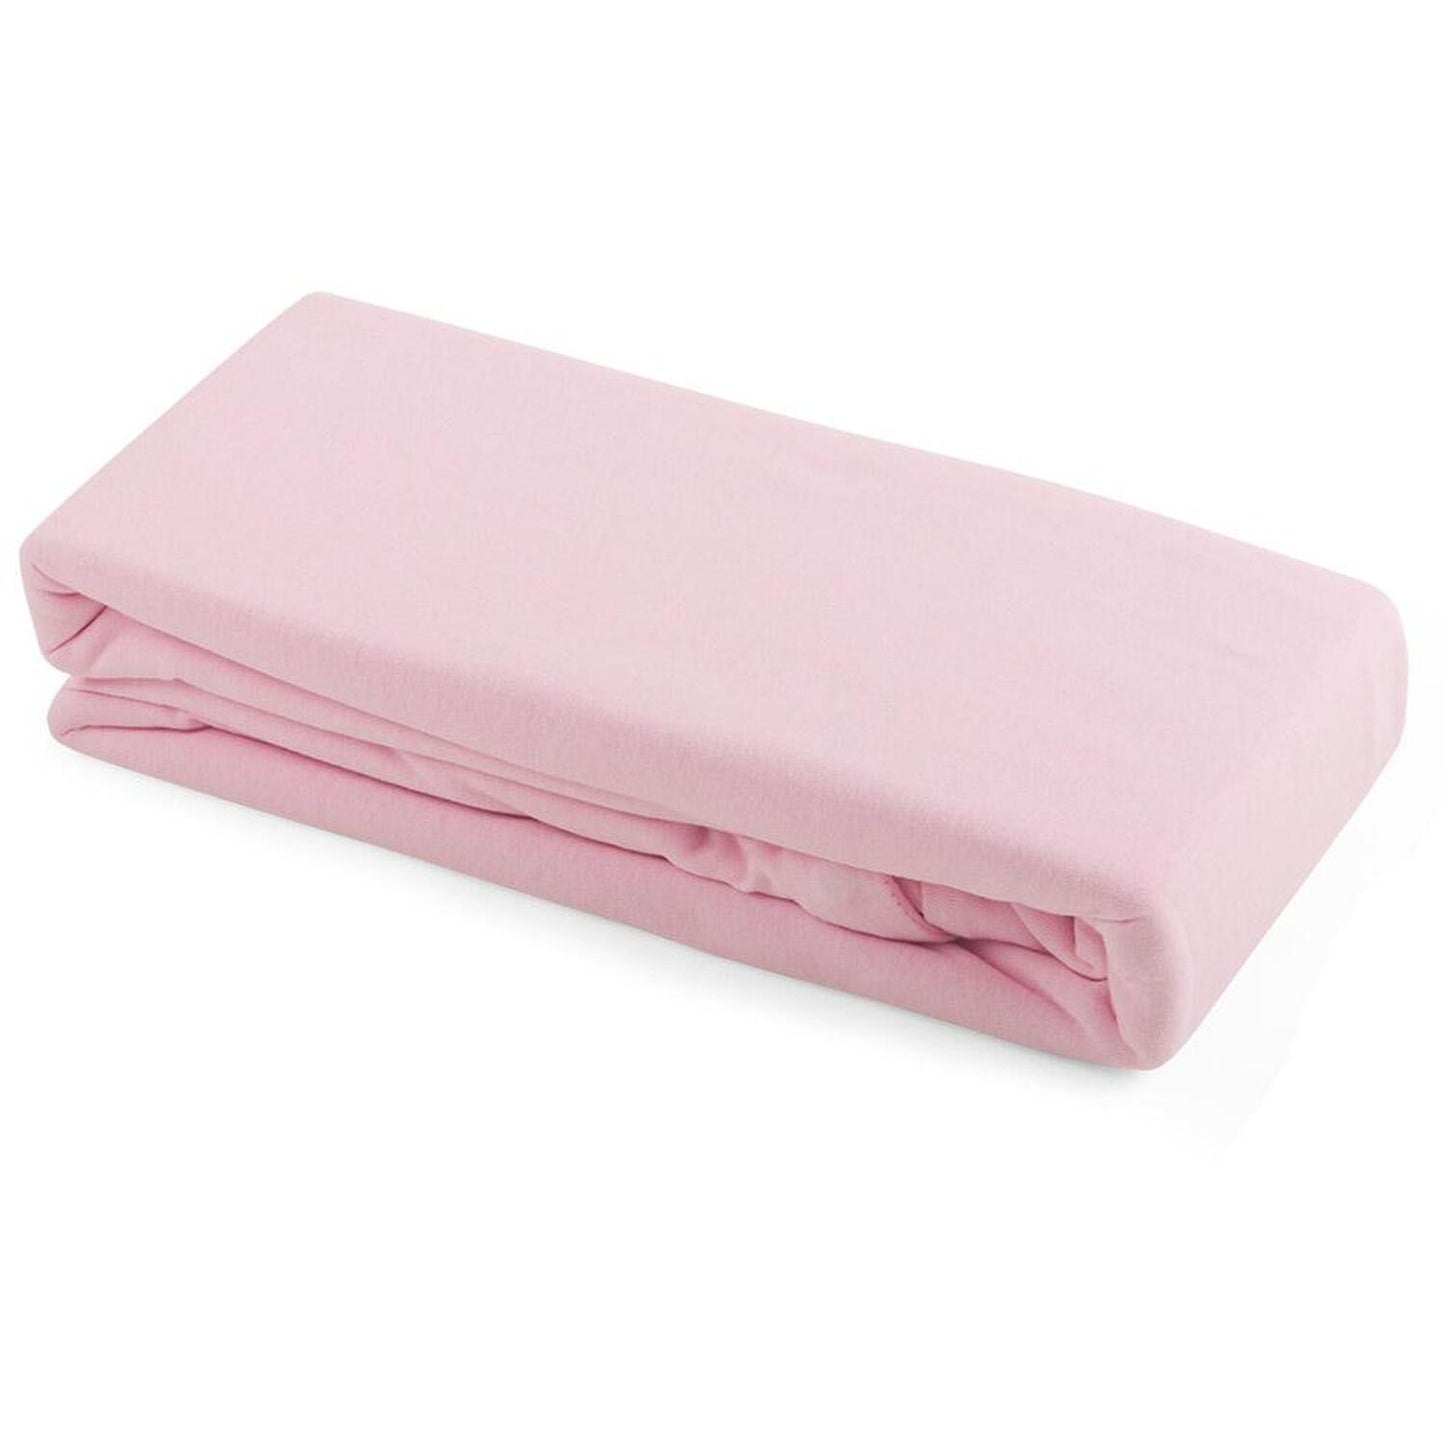 Pram Flannelette Flat Sheets Pink One Pair Baby Toddler 75cm x 100cm 100% Cotton